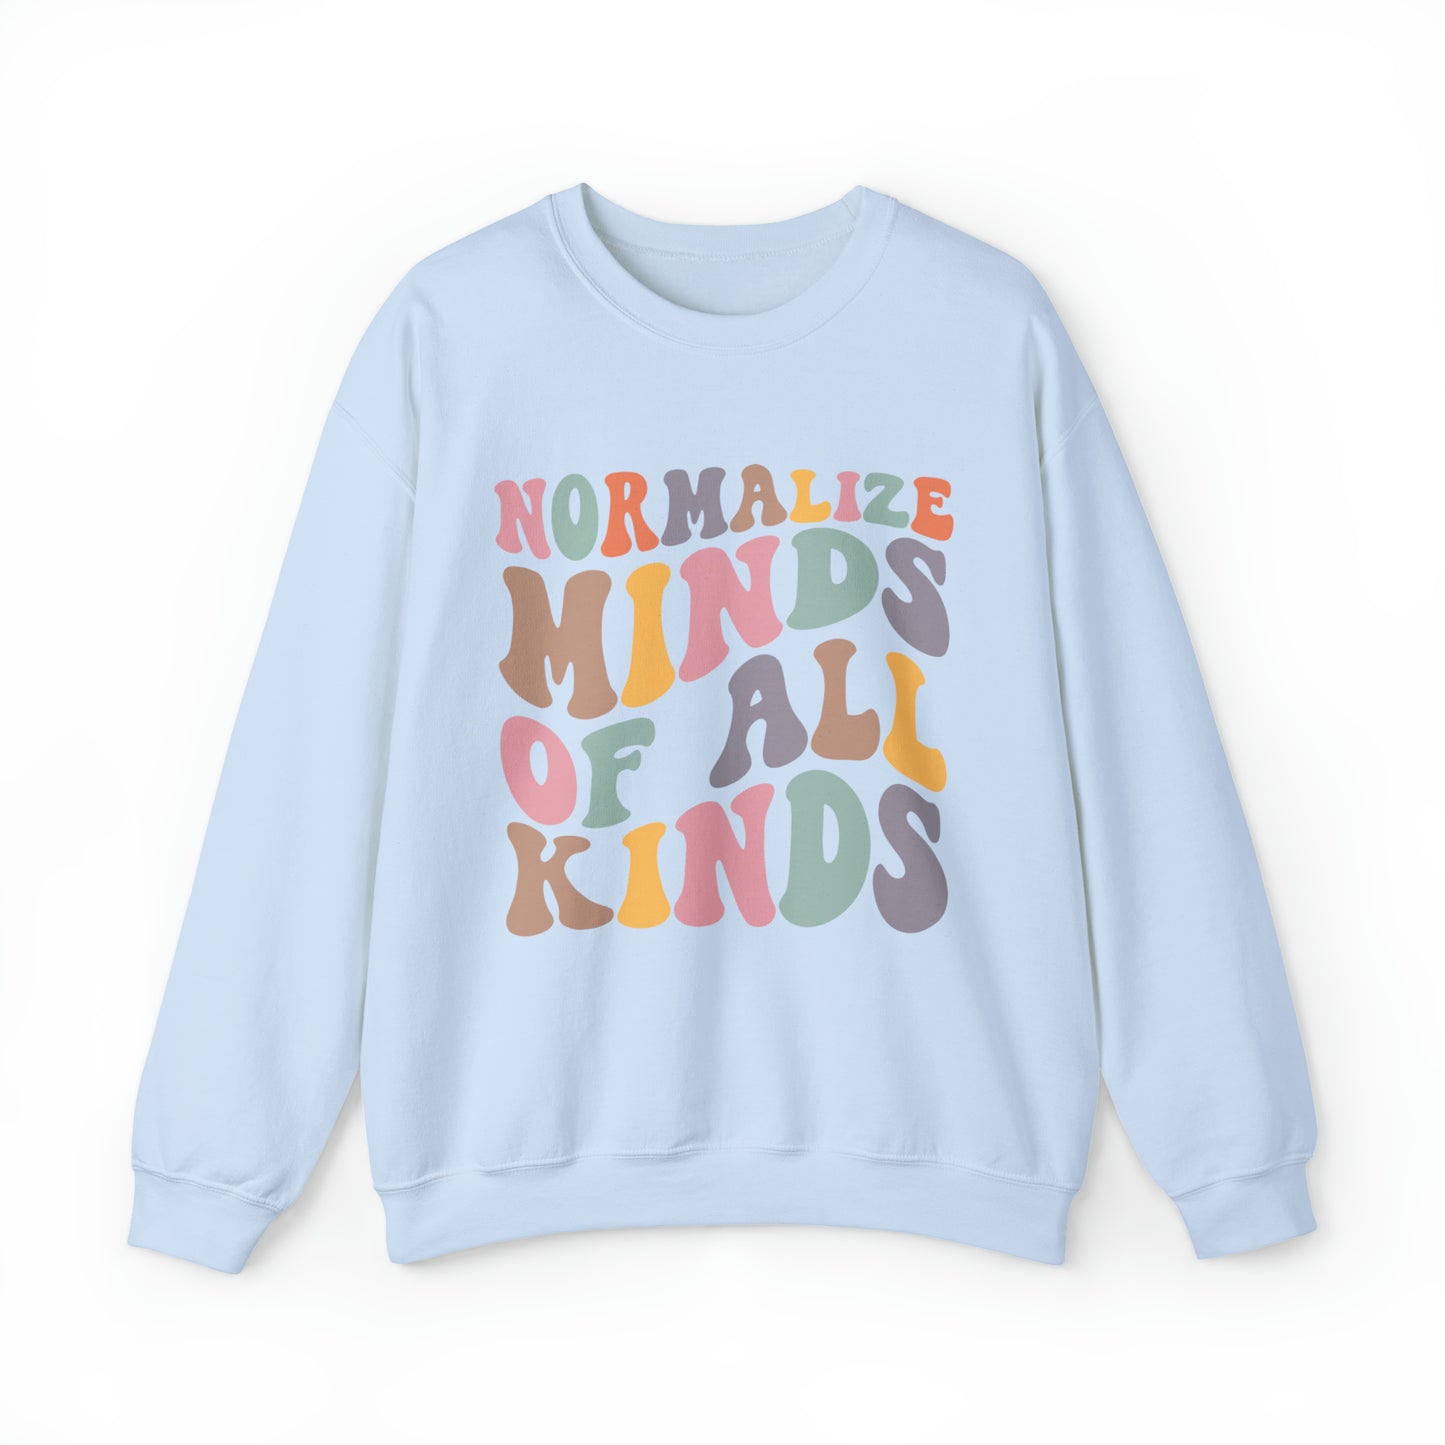 Normalize minds of all kinds Neurodiversity Women's Crewneck Sweatshirt